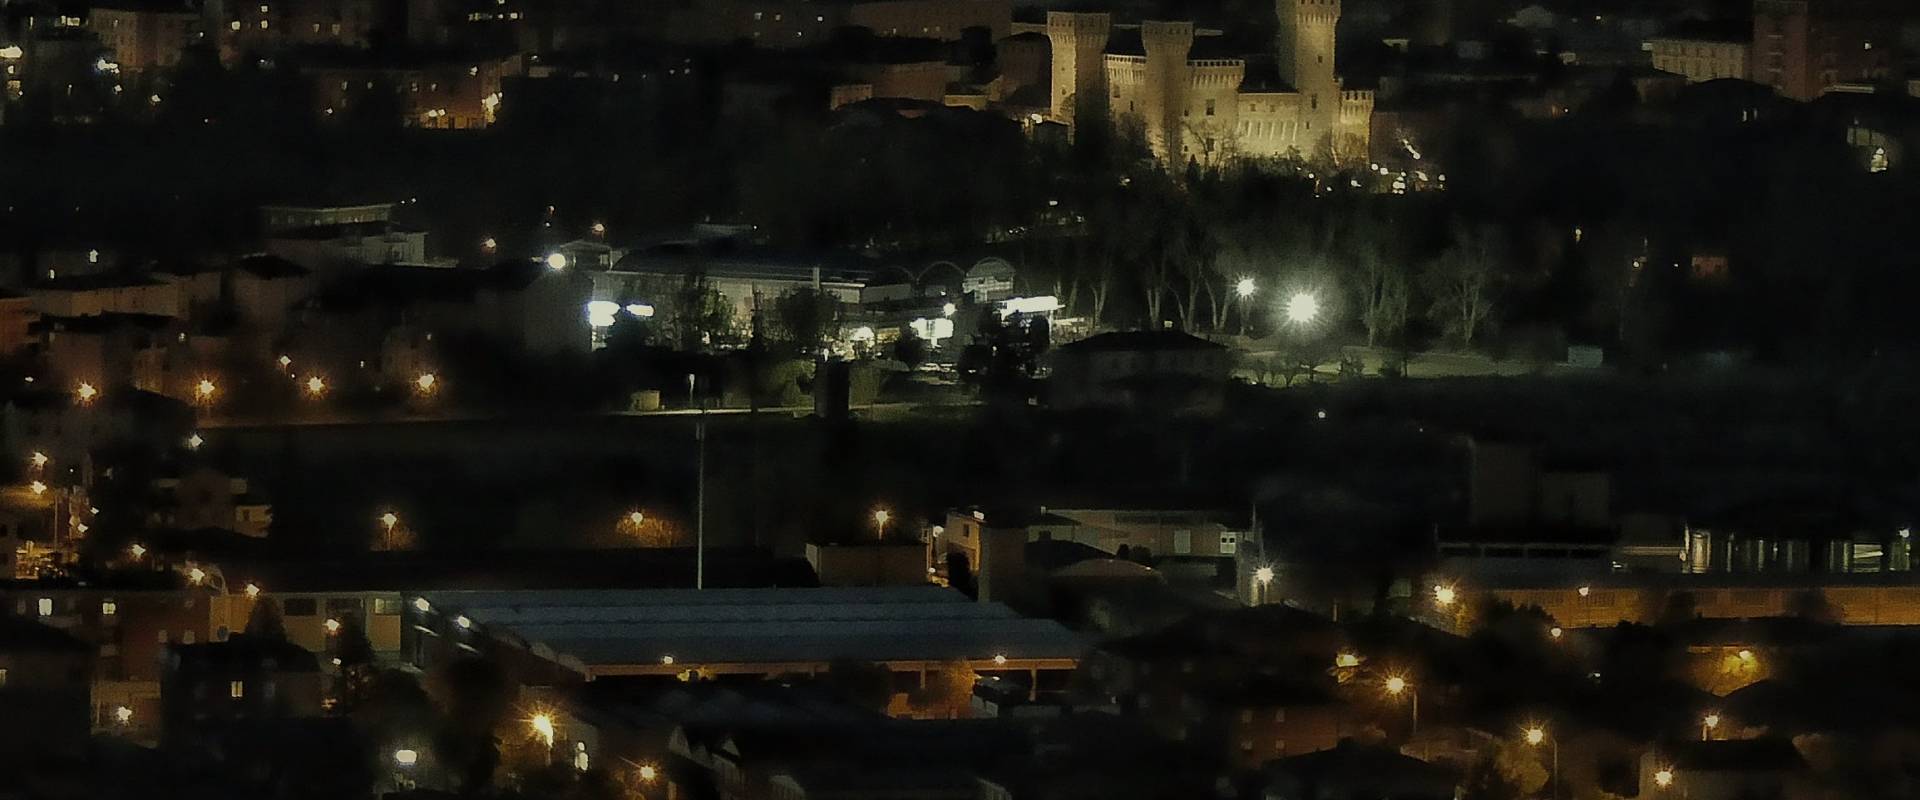 20170405185020-03-01 veduta notturna della città foto di Massimo F. Dondi